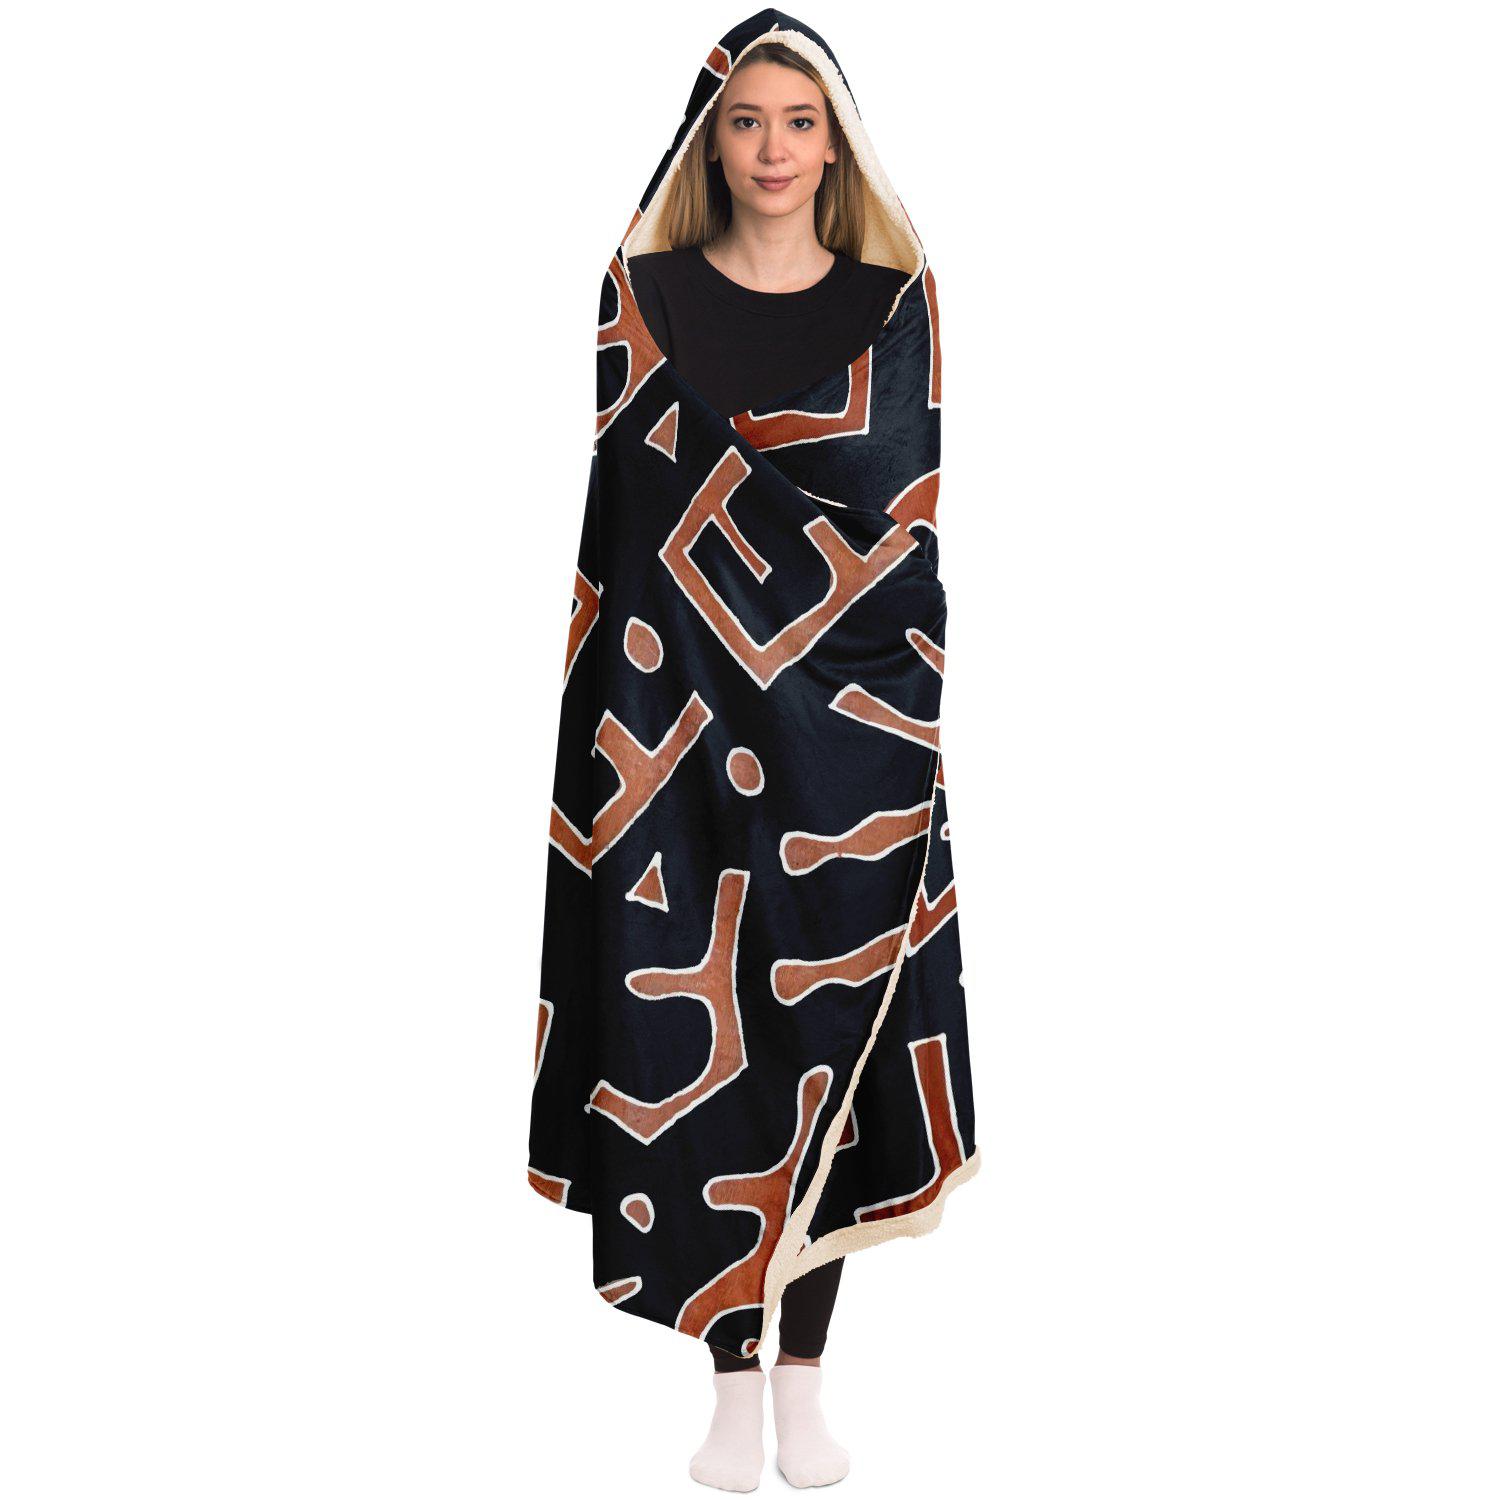 Hooded Blanket - AOP Contemporary Design Hooded Blanket